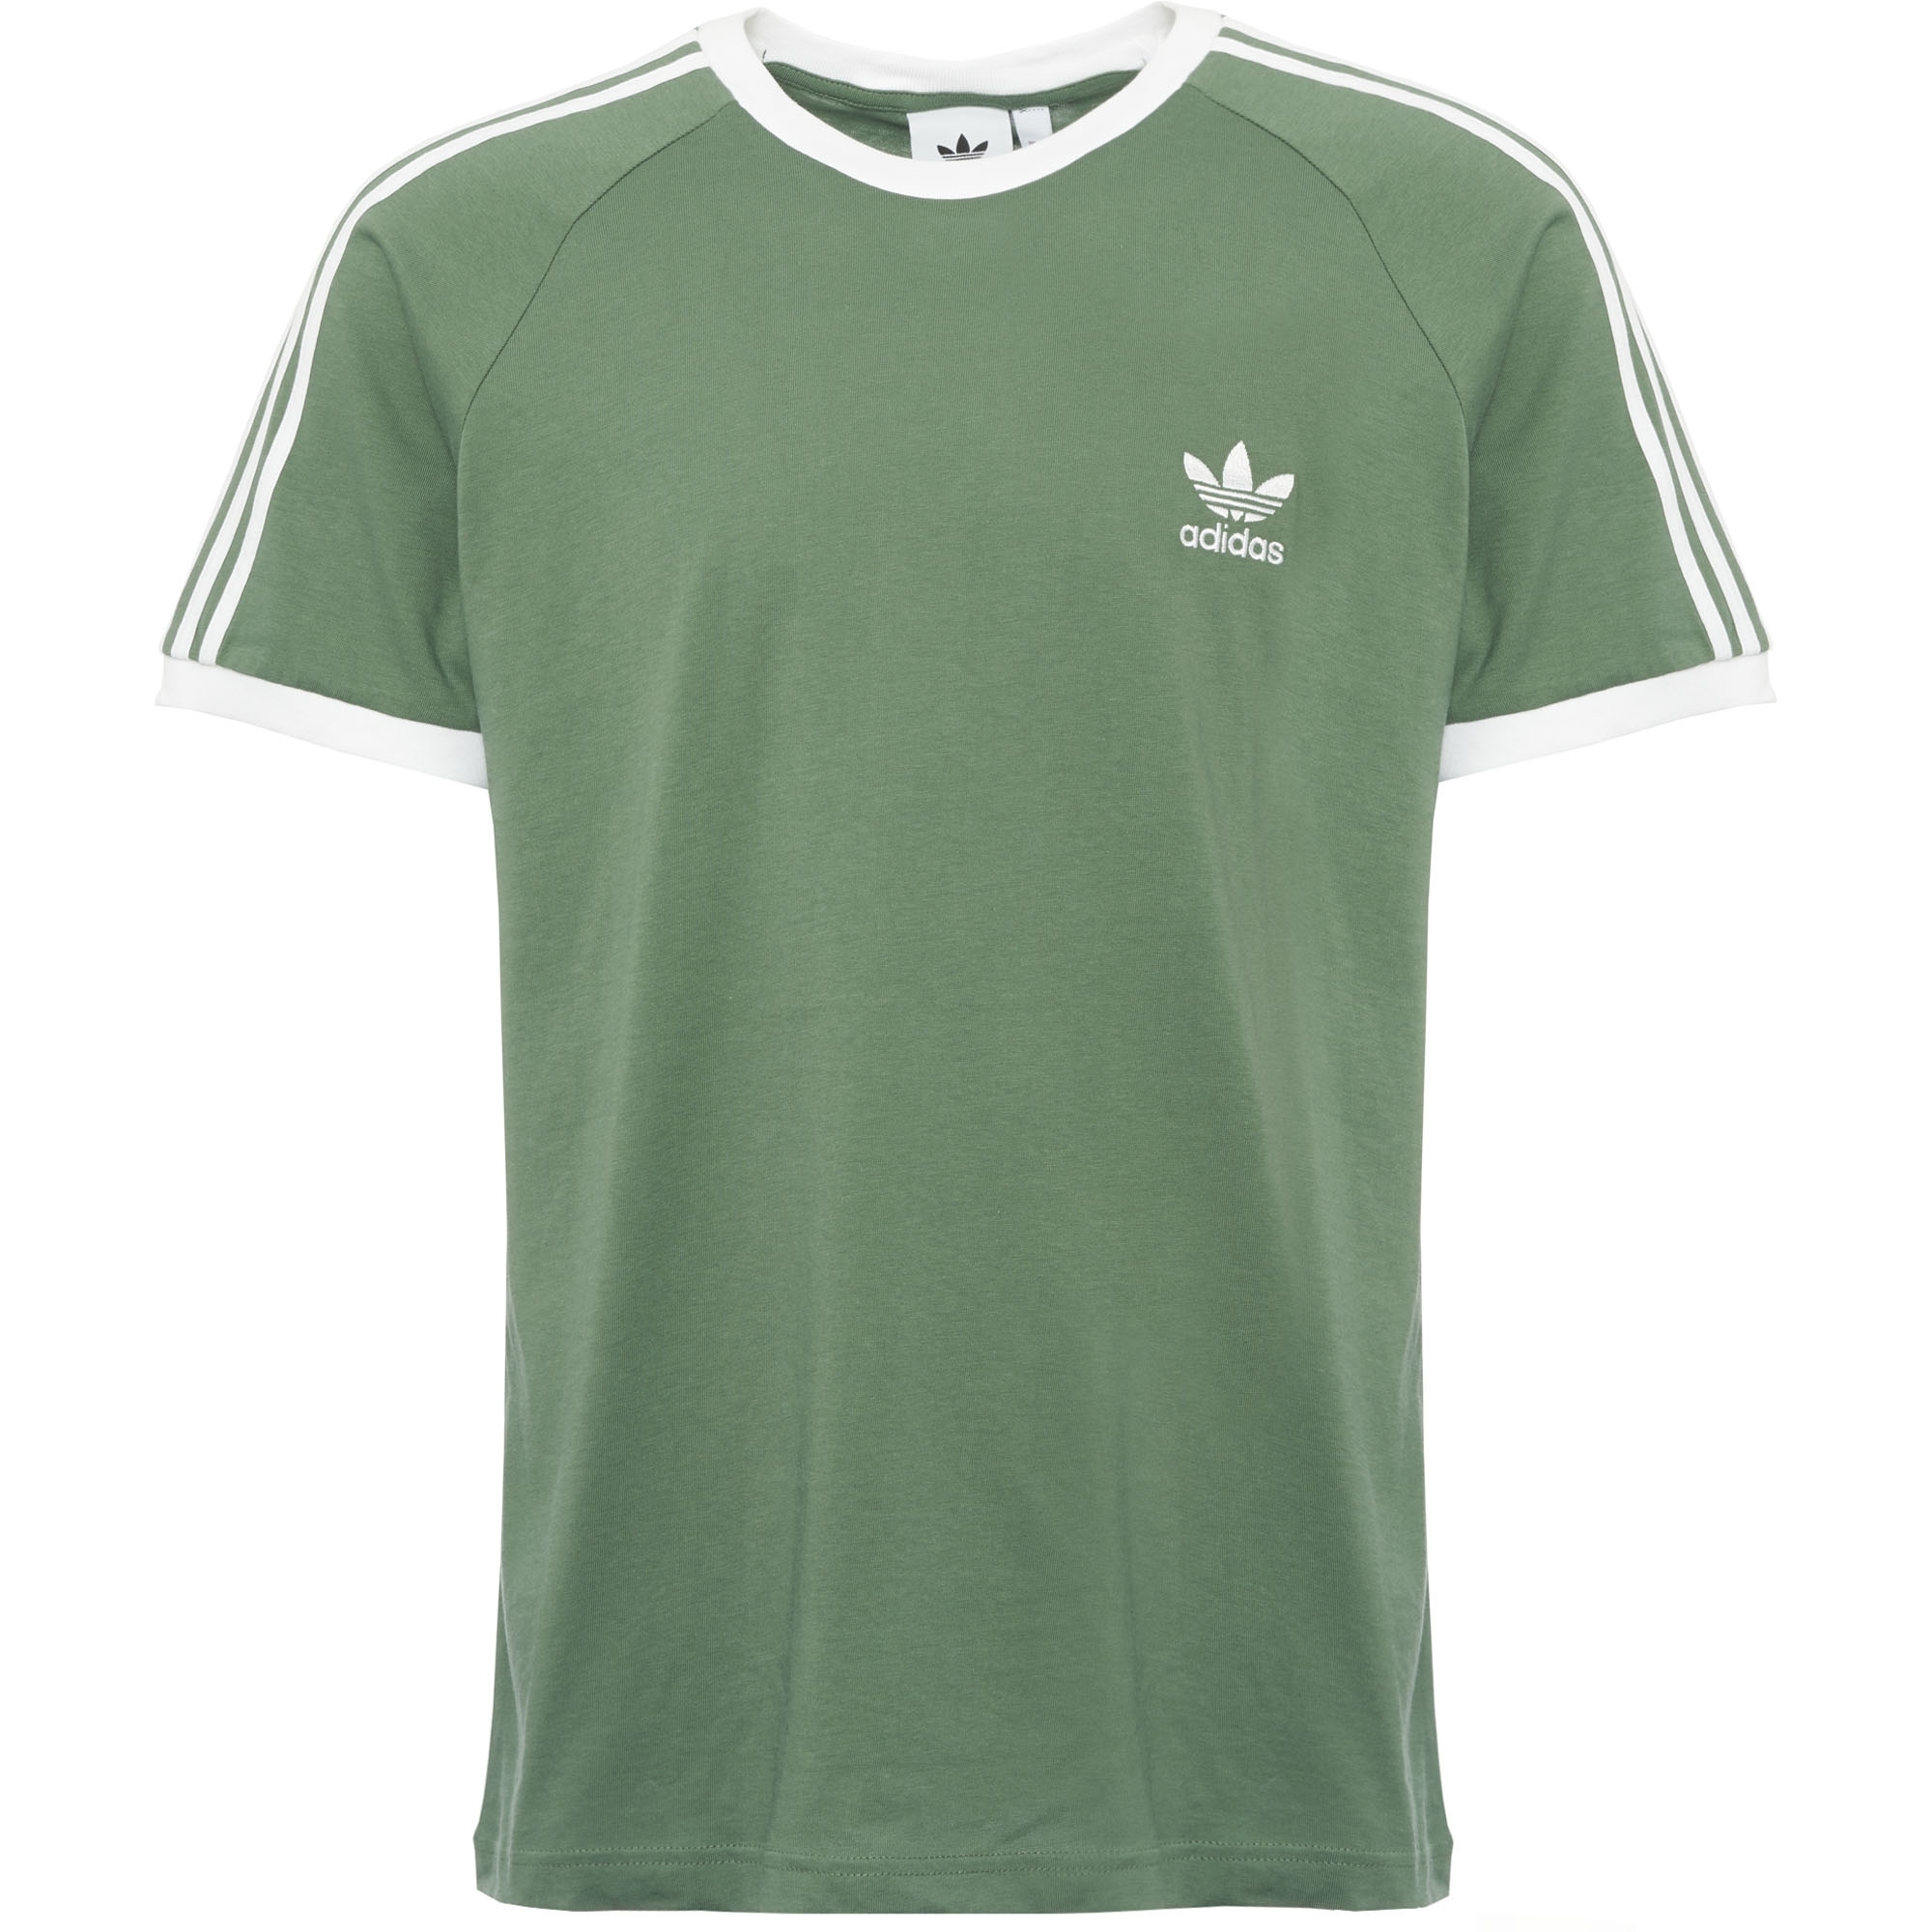 Adidas Originals Mens Trefoil 3 Stripe Crew Short Sleeve T Shirt S M L ...